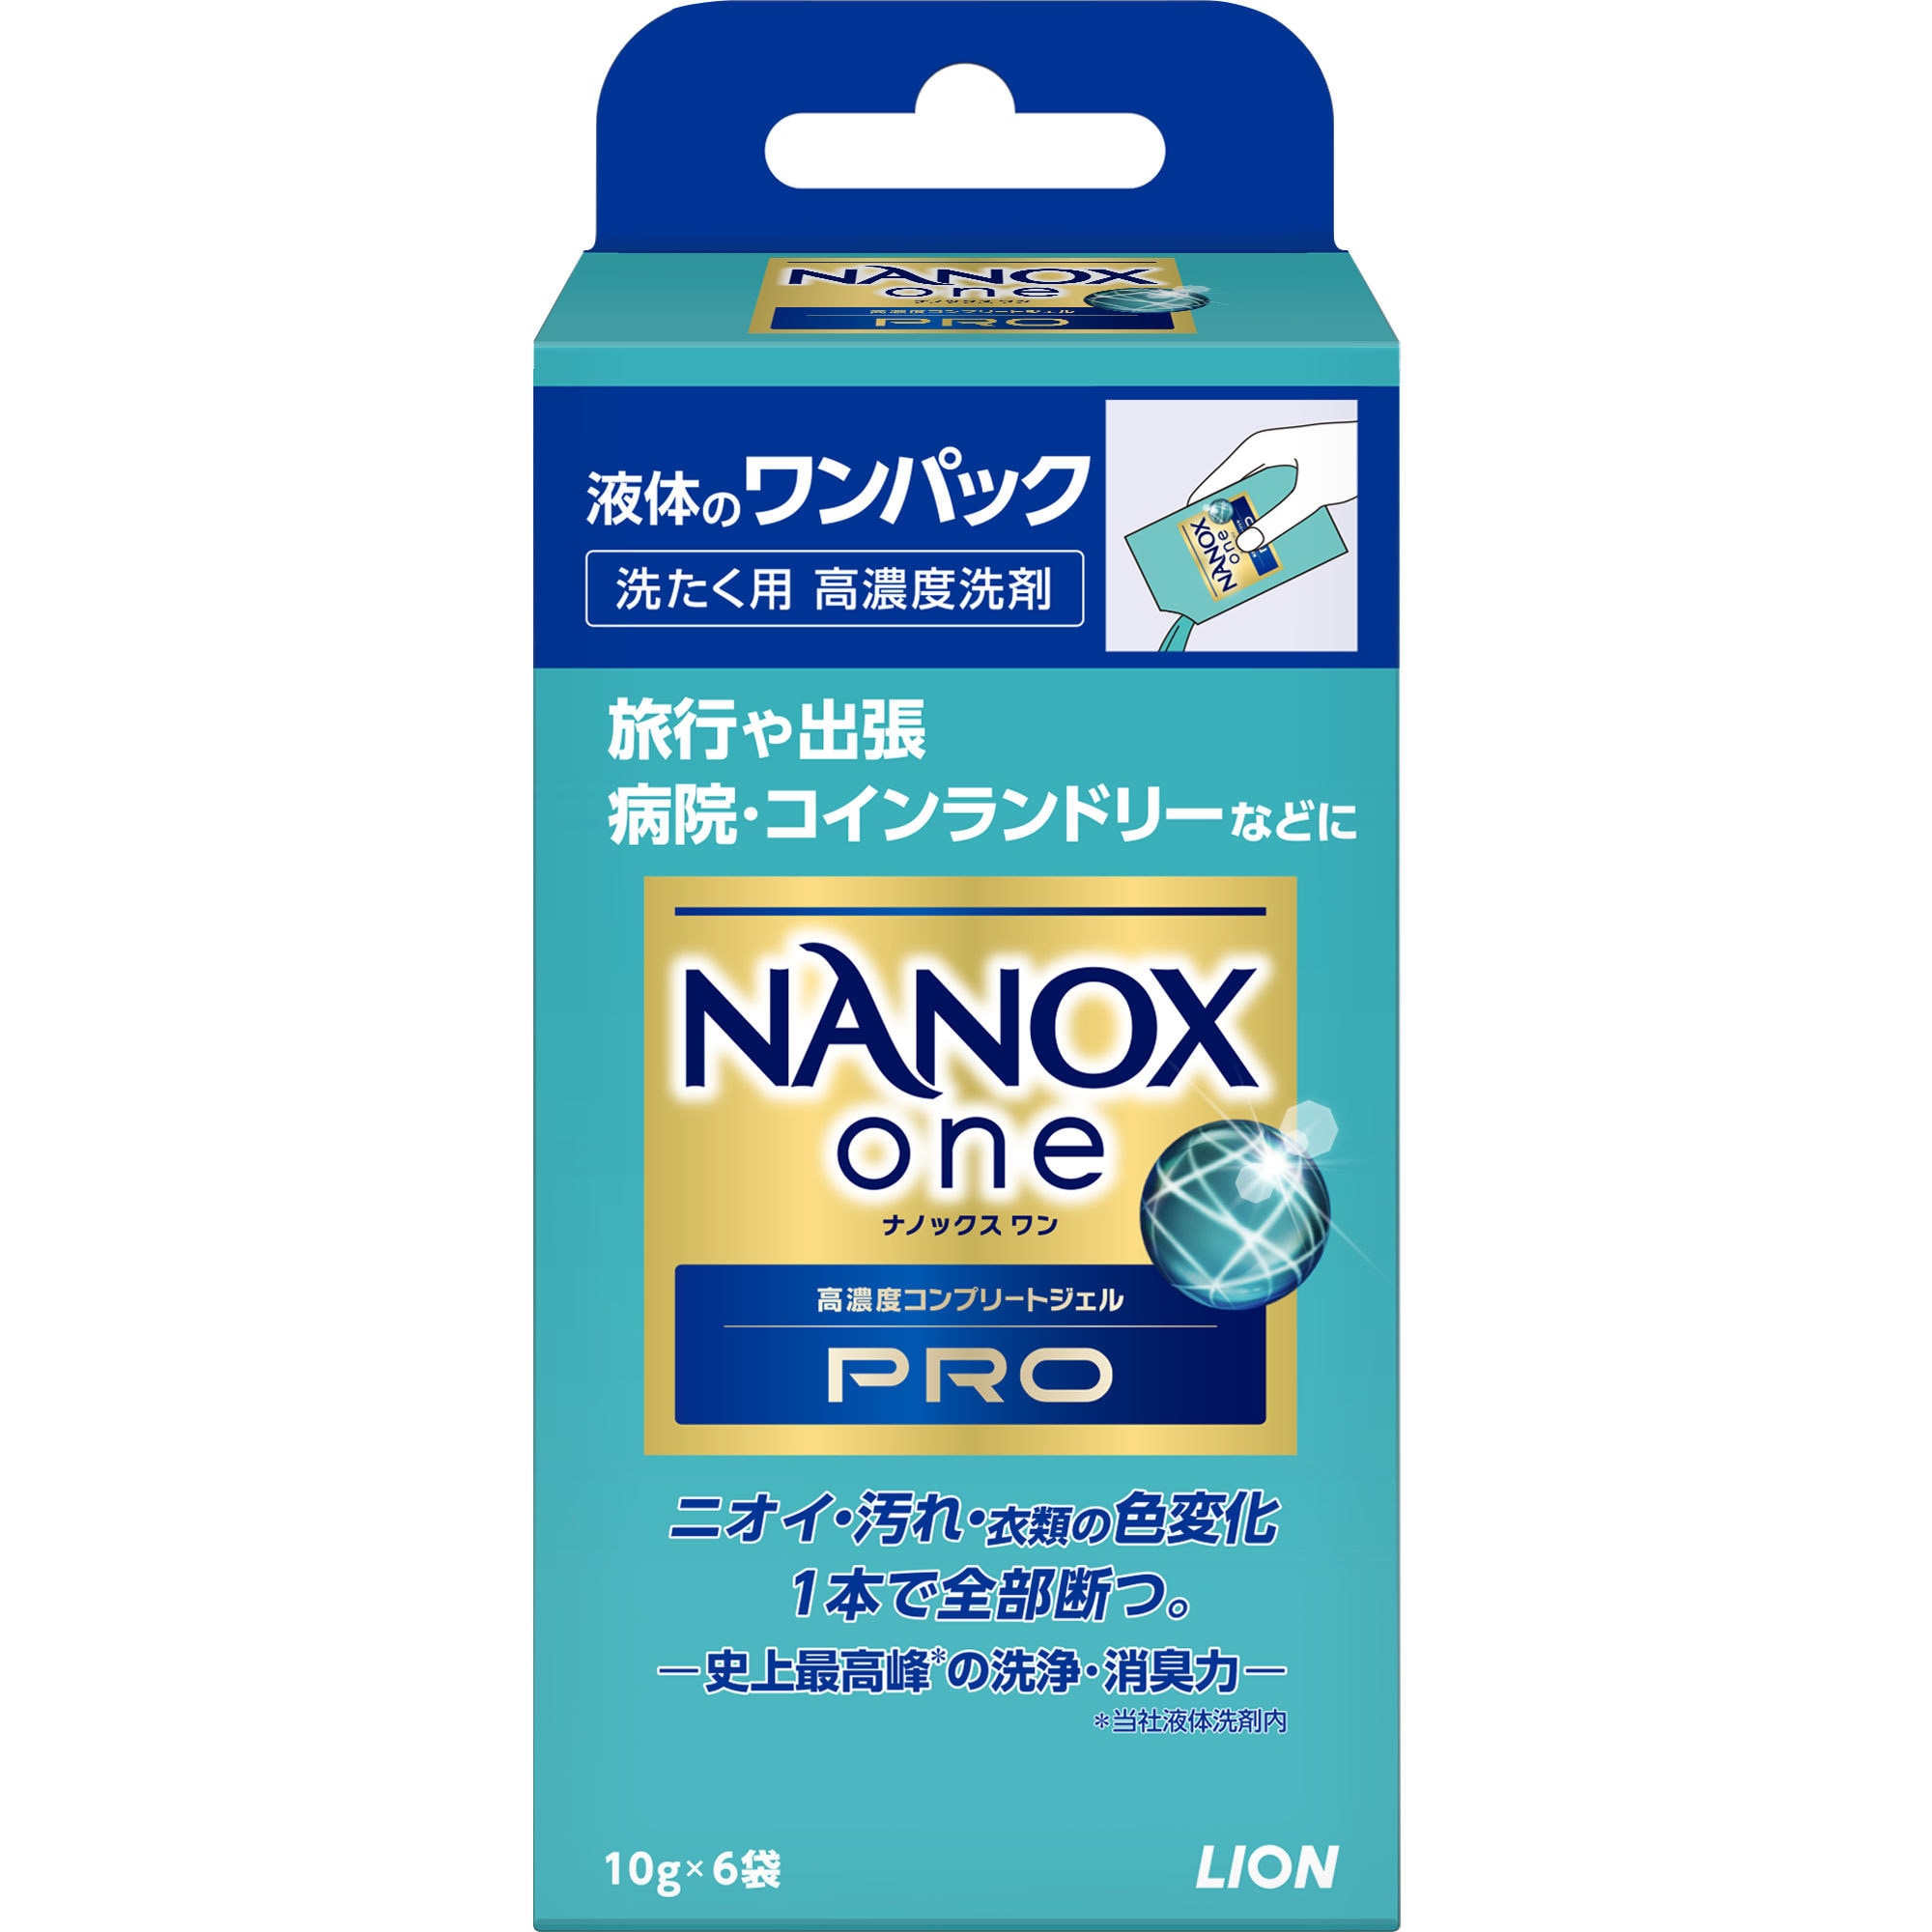 NANOX one PRO 1パック(10g×6個) LION(ライオン) 【通販サイトMonotaRO】